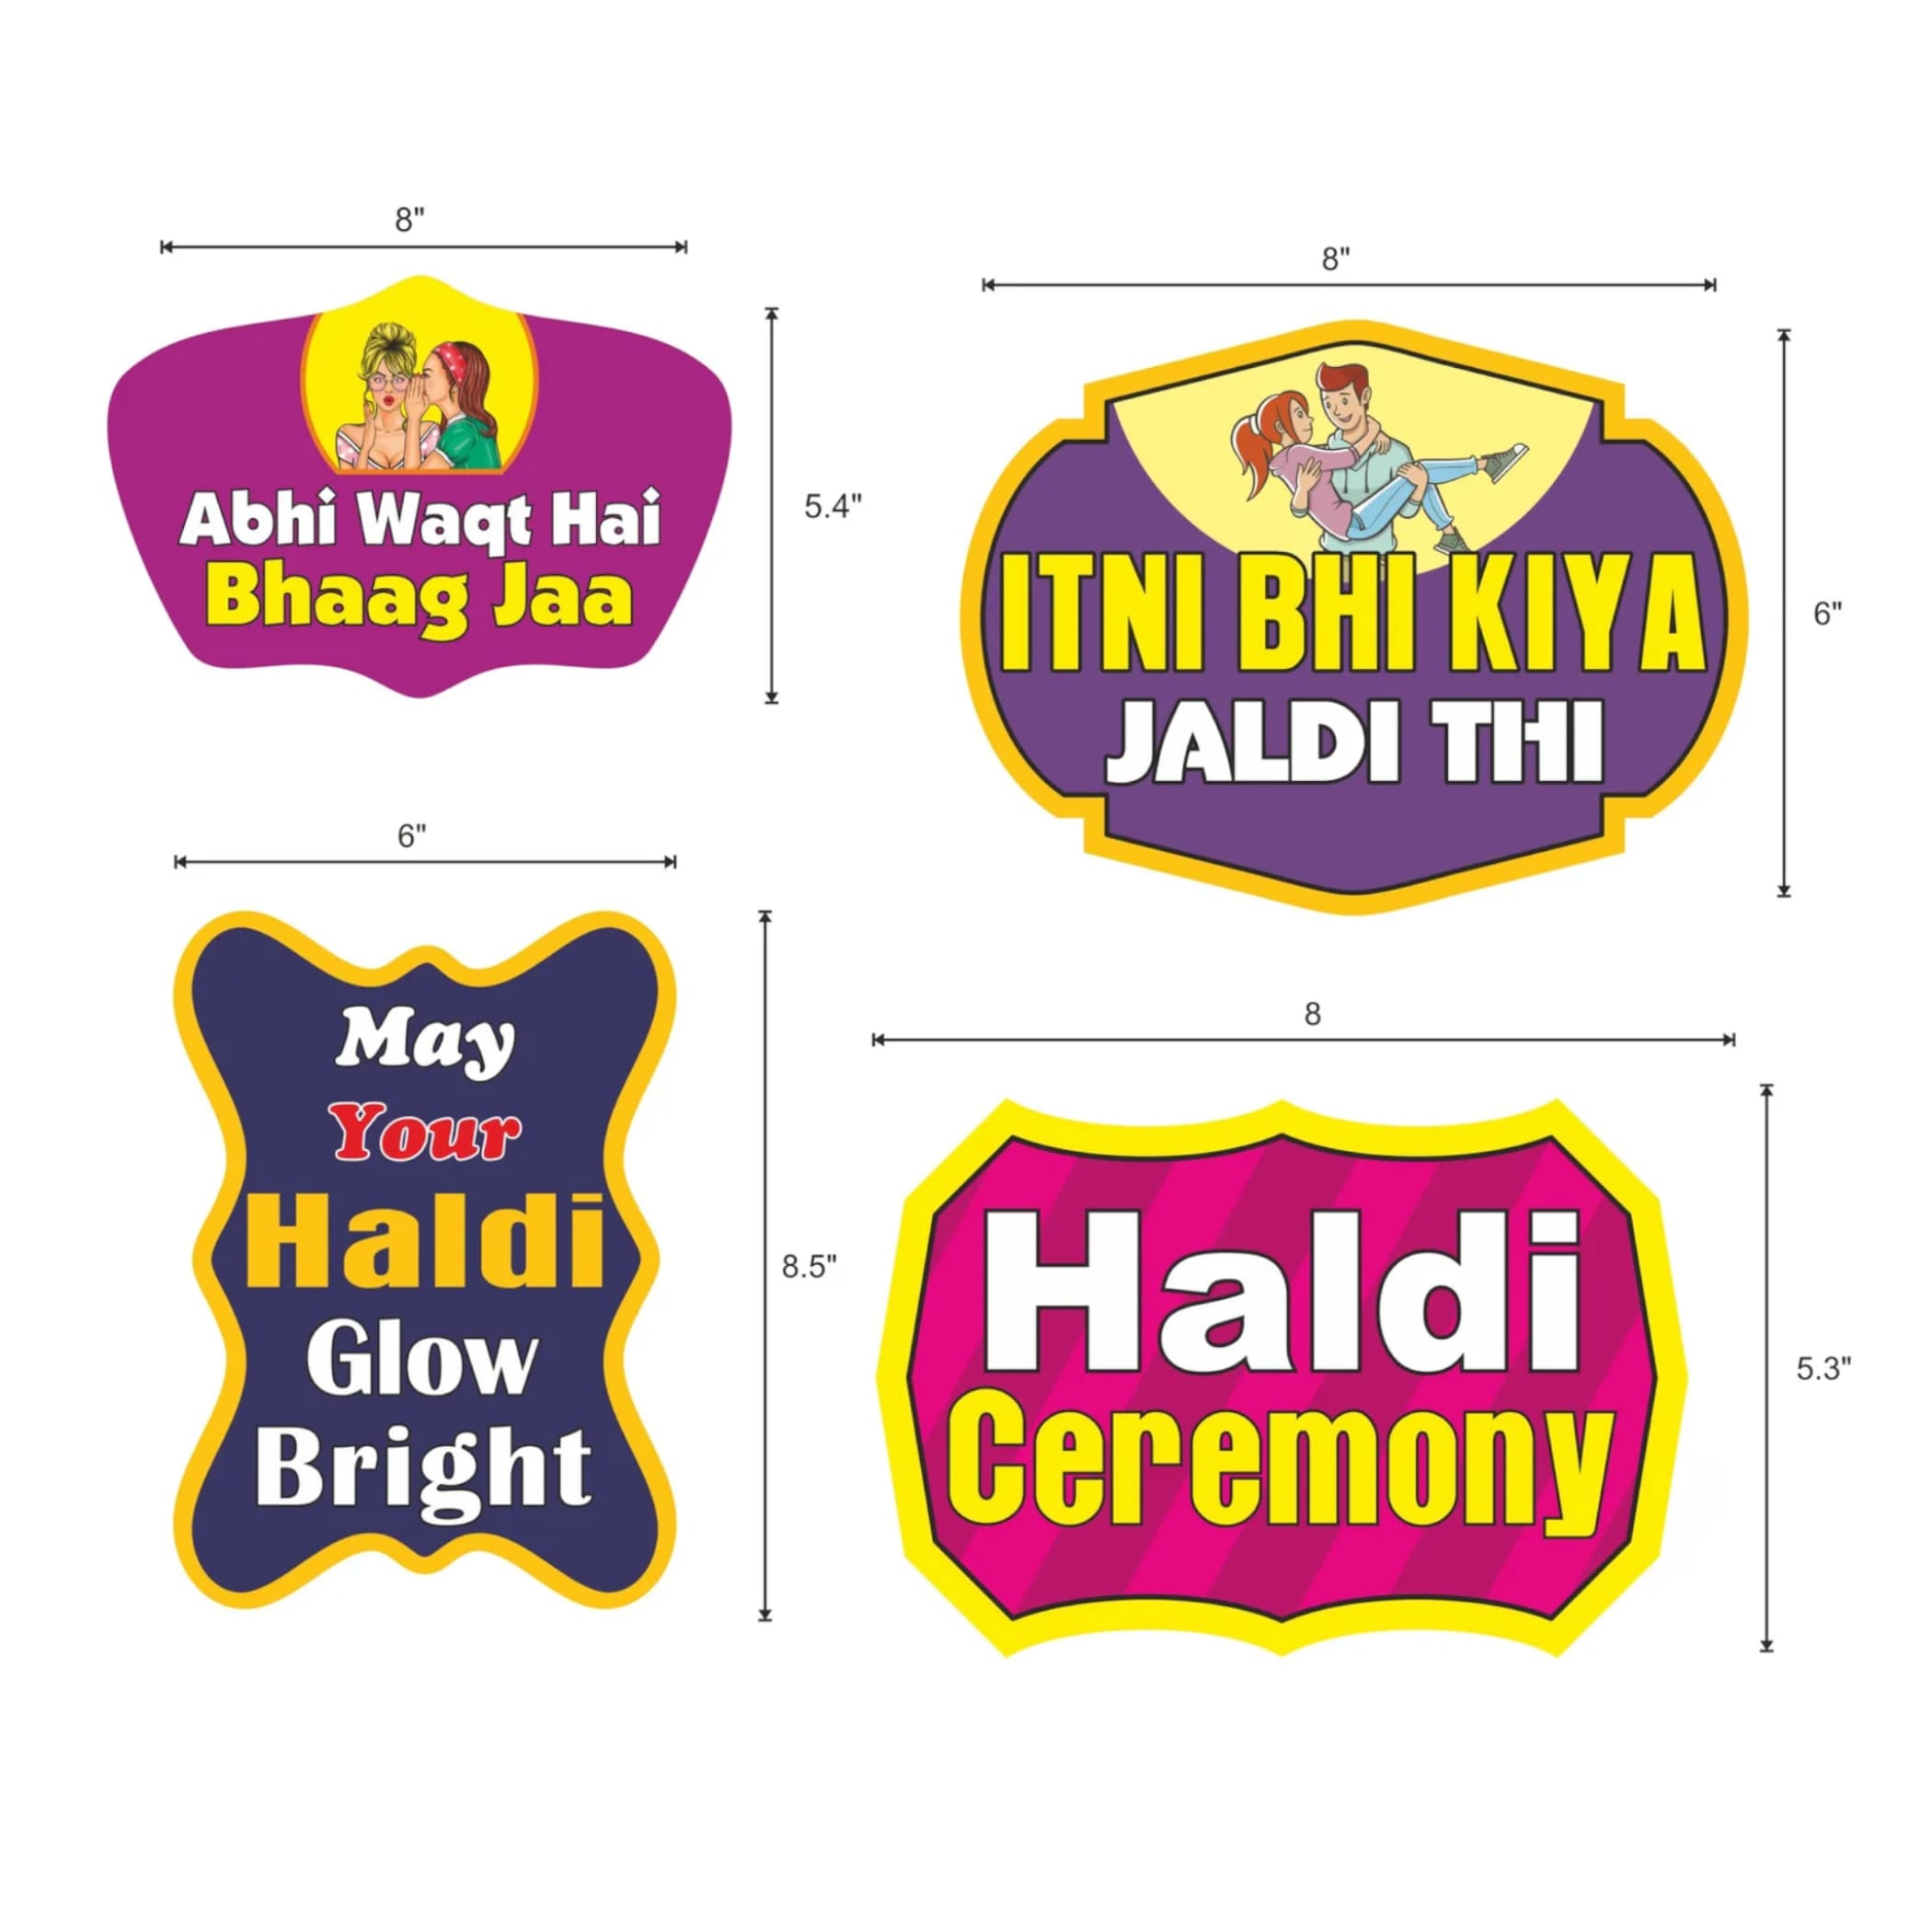 Haldi ceremony photo booth party props set of 14 pcs